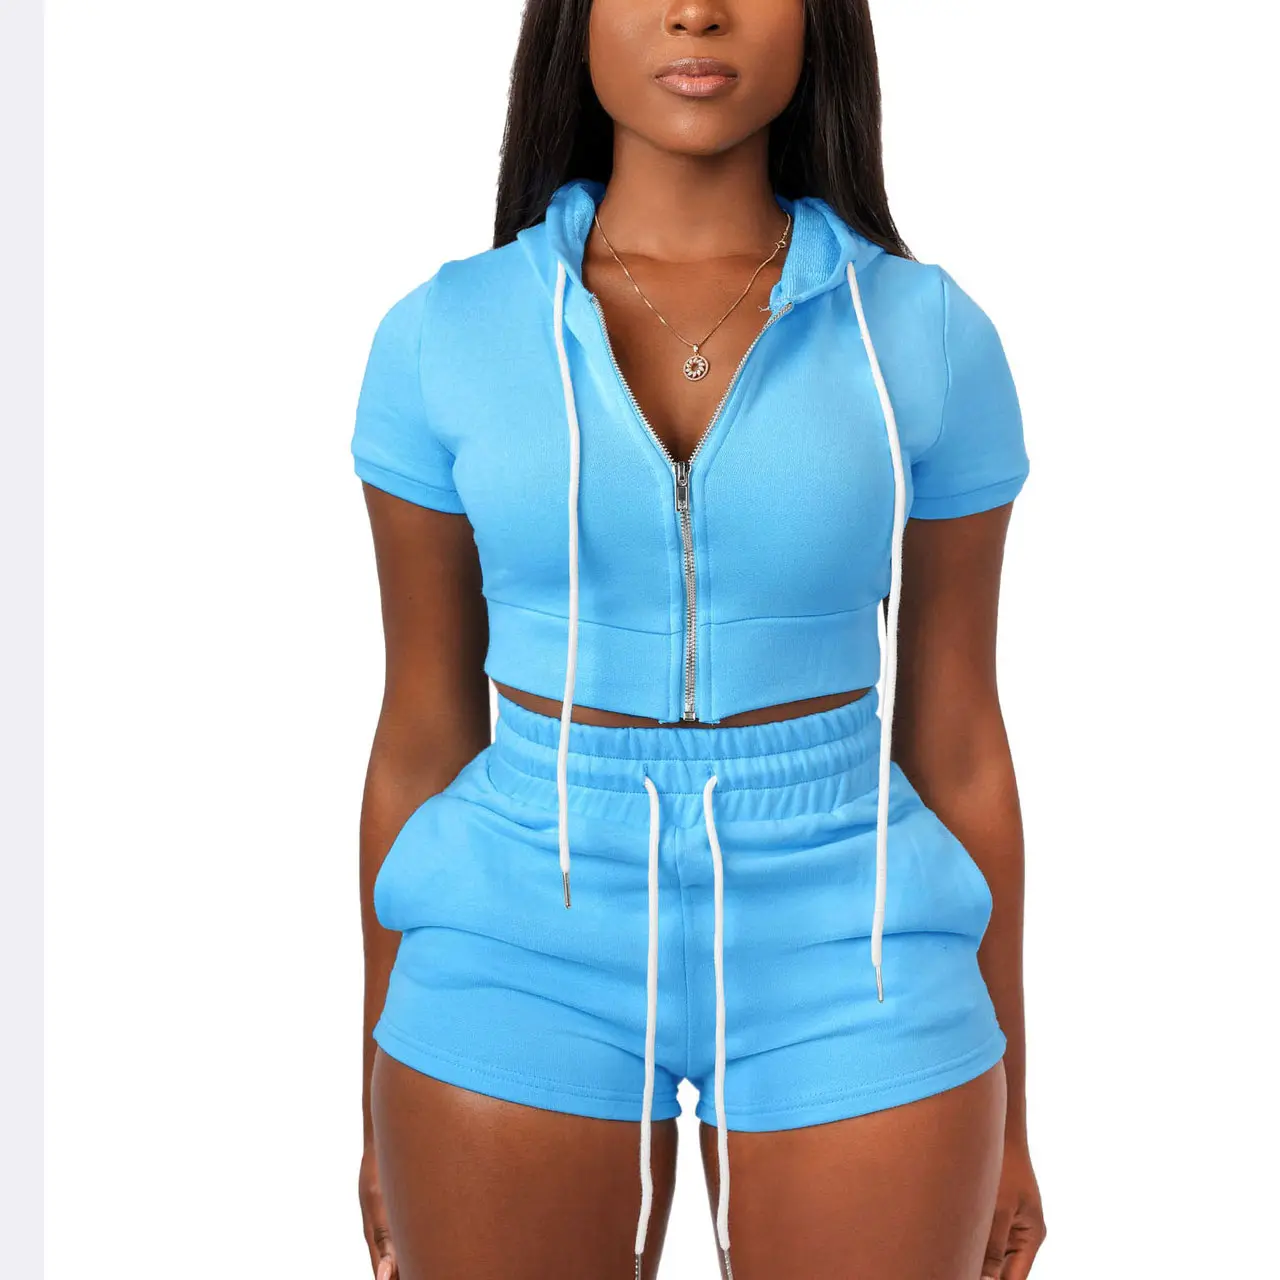 hip hop design BOOTY shorts VIGA sale Women's shorts and top viga sports 100% quality PK customize top supplier